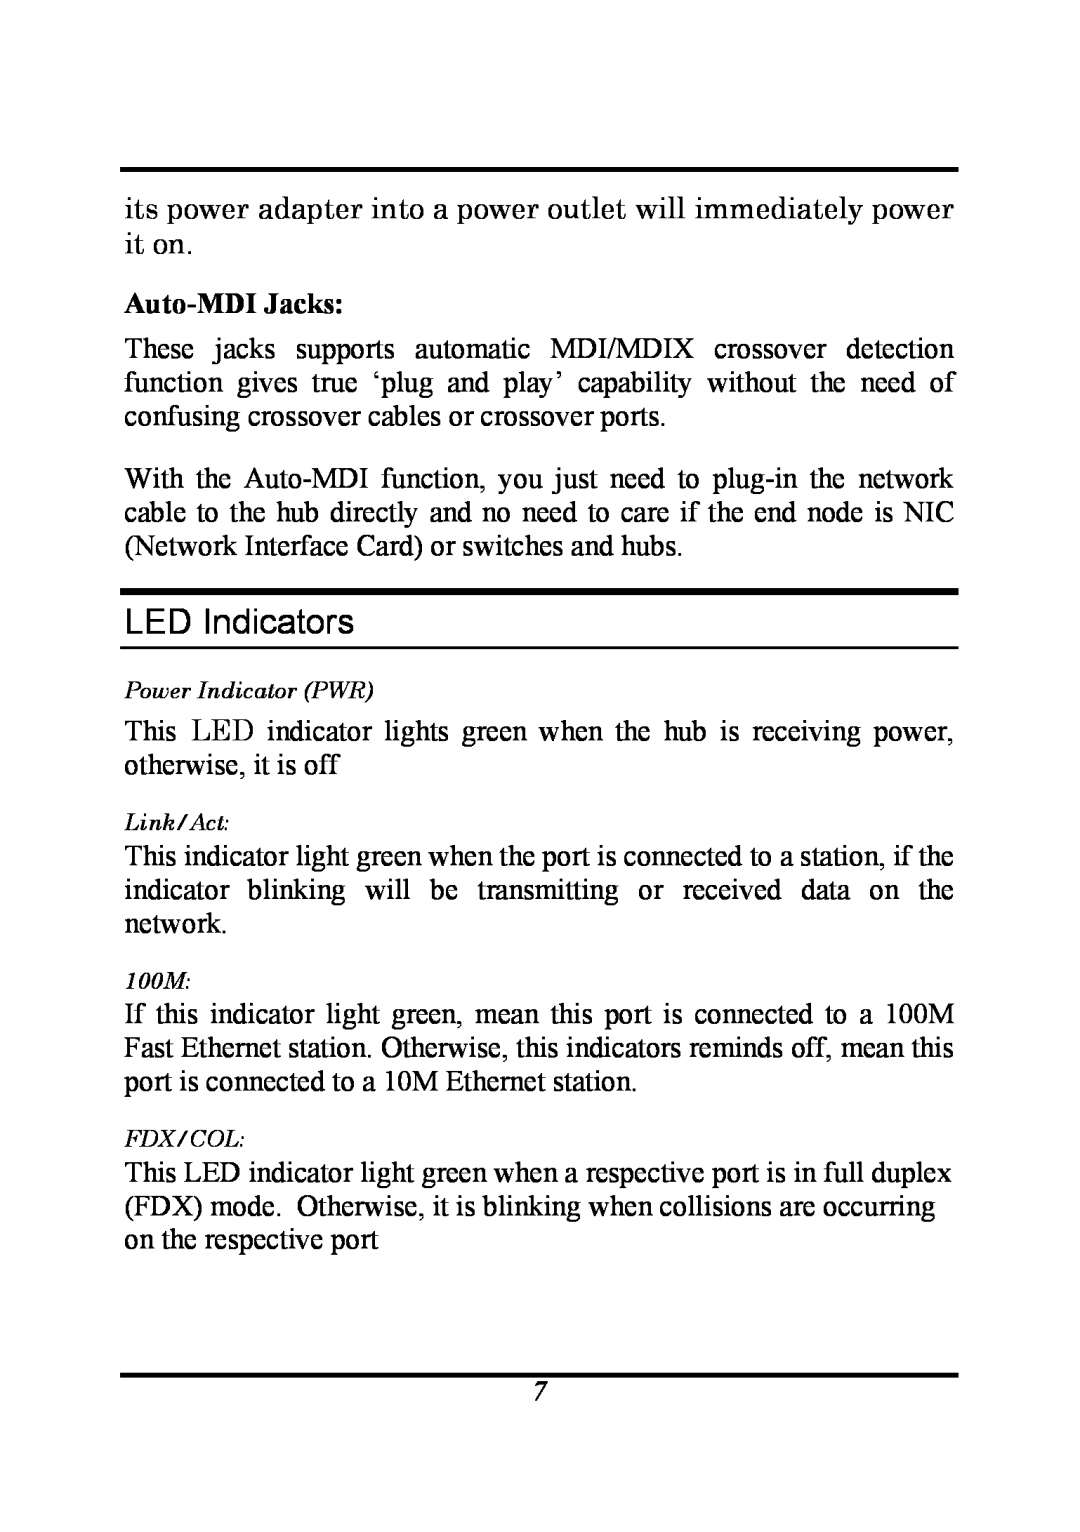 D-Link DSS-5 manual LED Indicators, Auto-MDI Jacks 